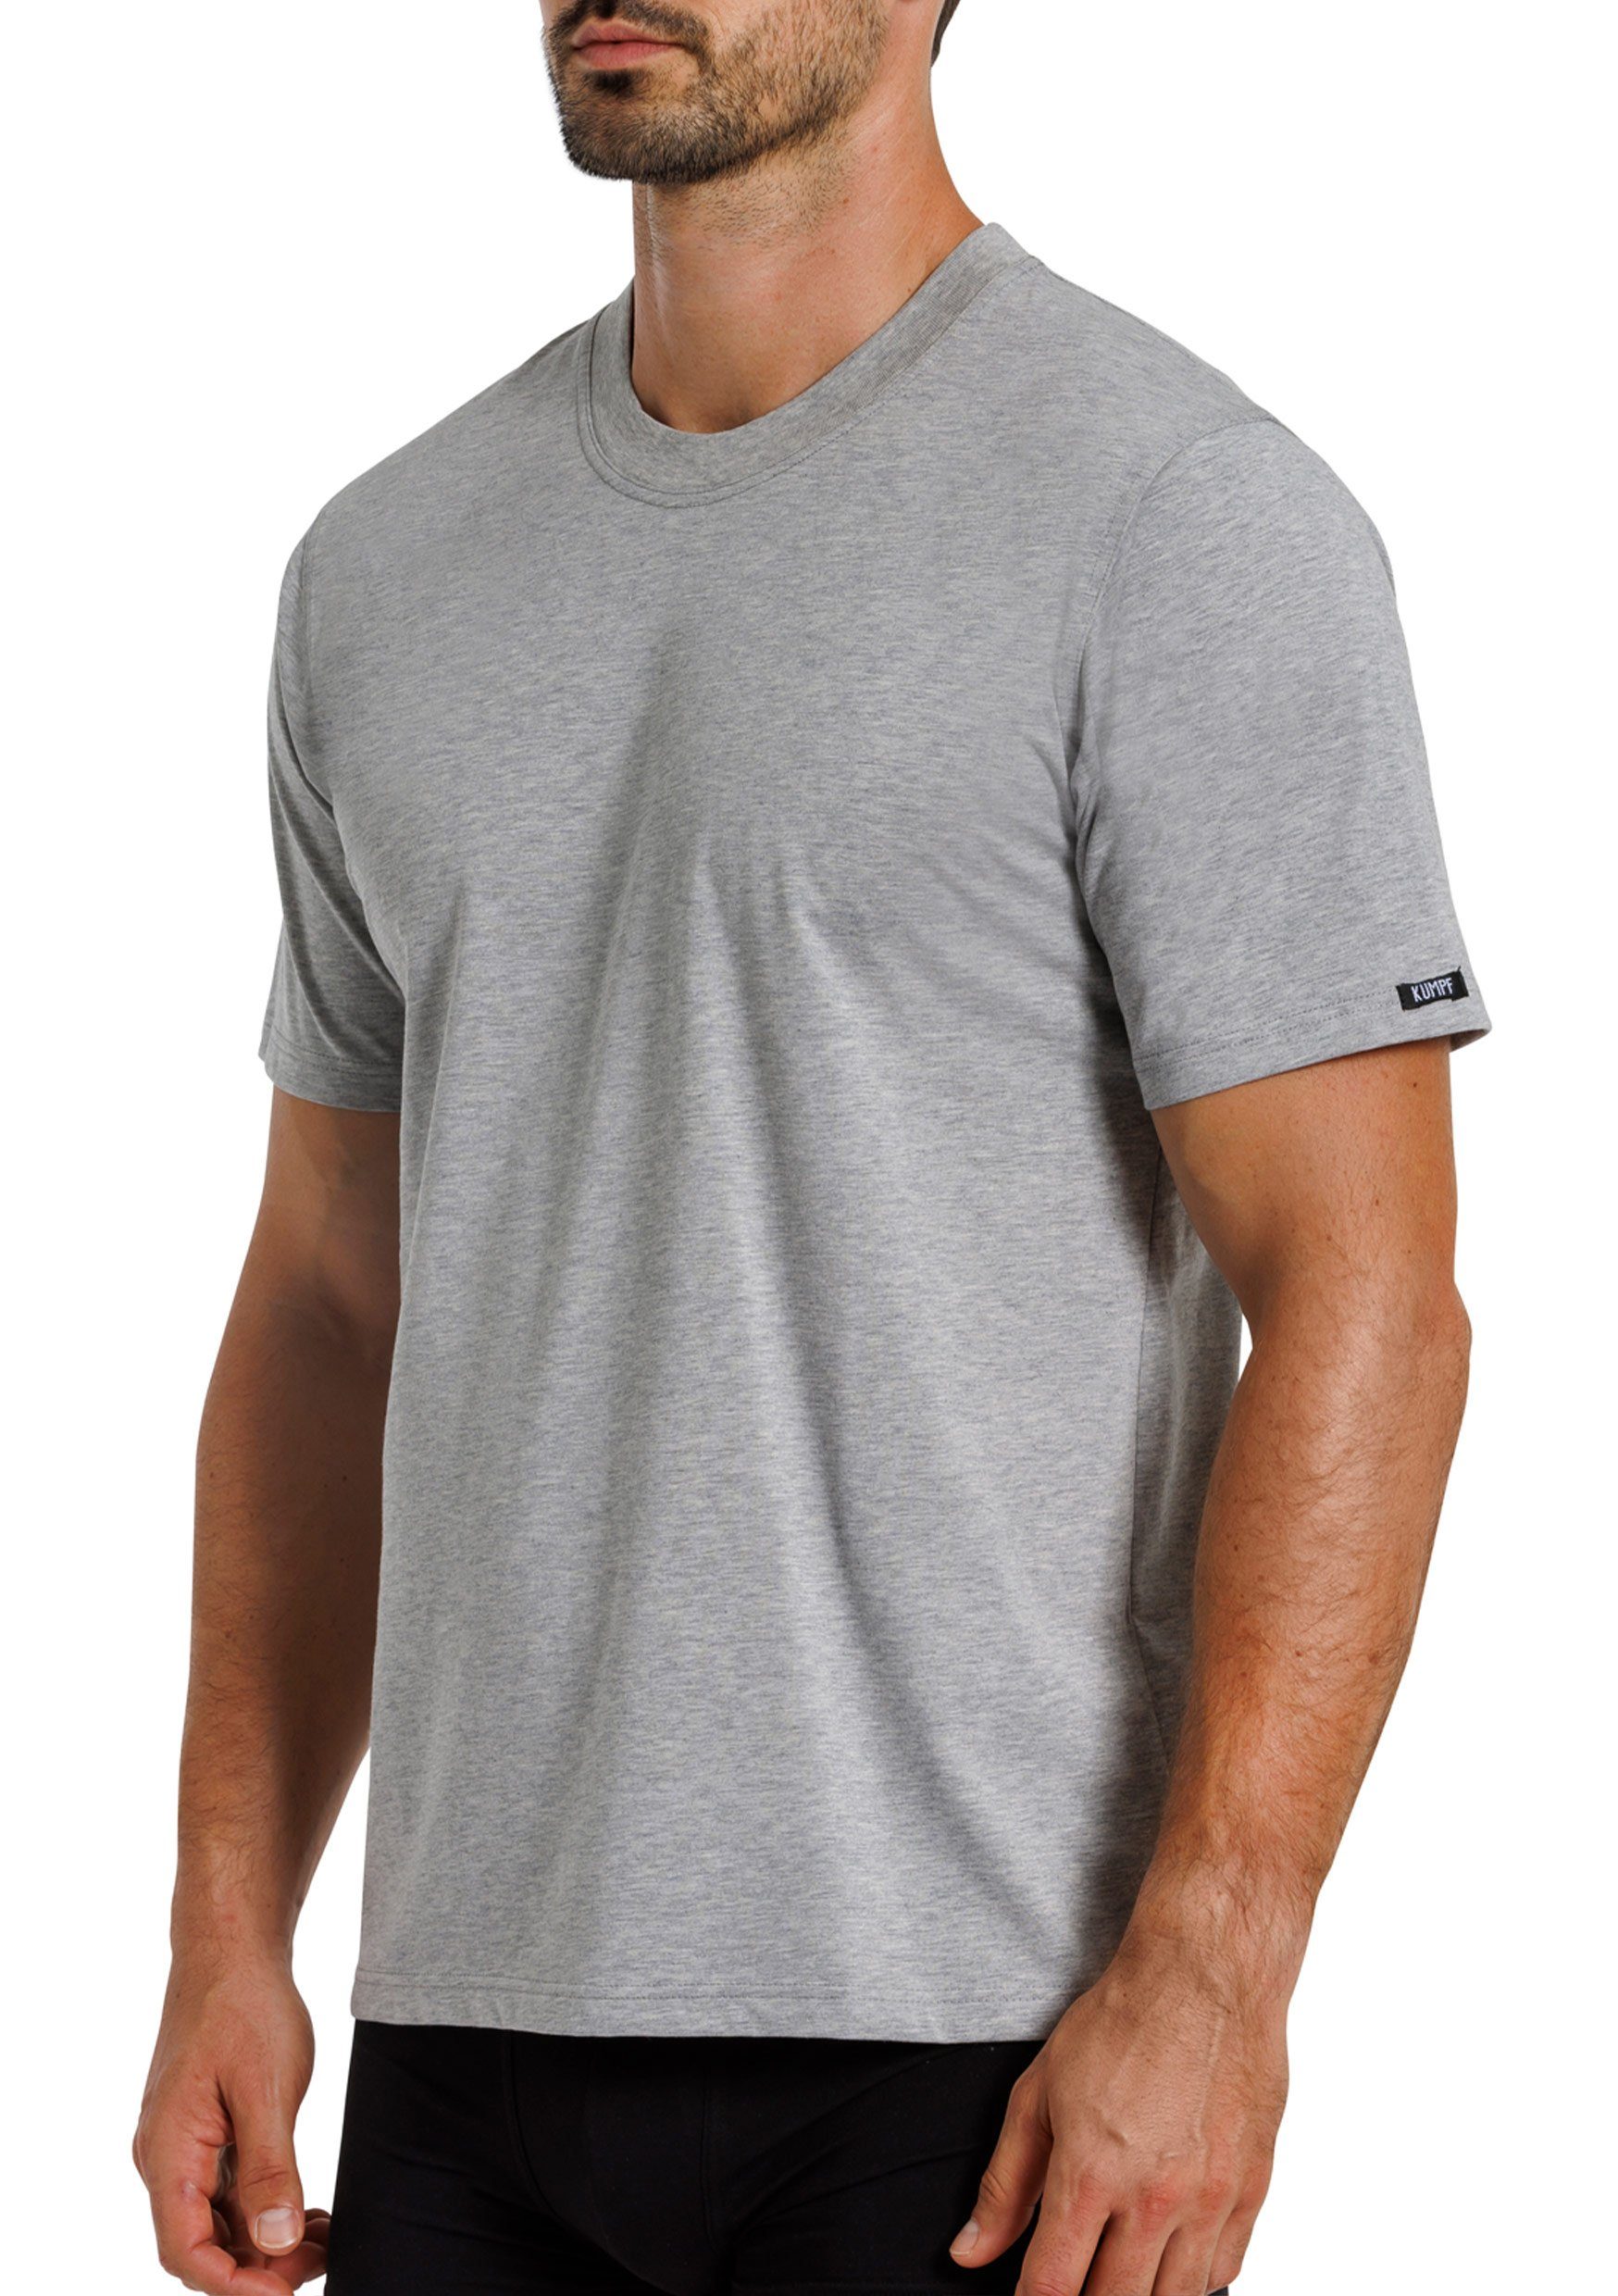 stahlgrau-melange poseidon KUMPF Cotton T-Shirt hohe (Spar-Set, 4-St) Sparpack 4er Herren Bio Markenqualität Unterziehshirt